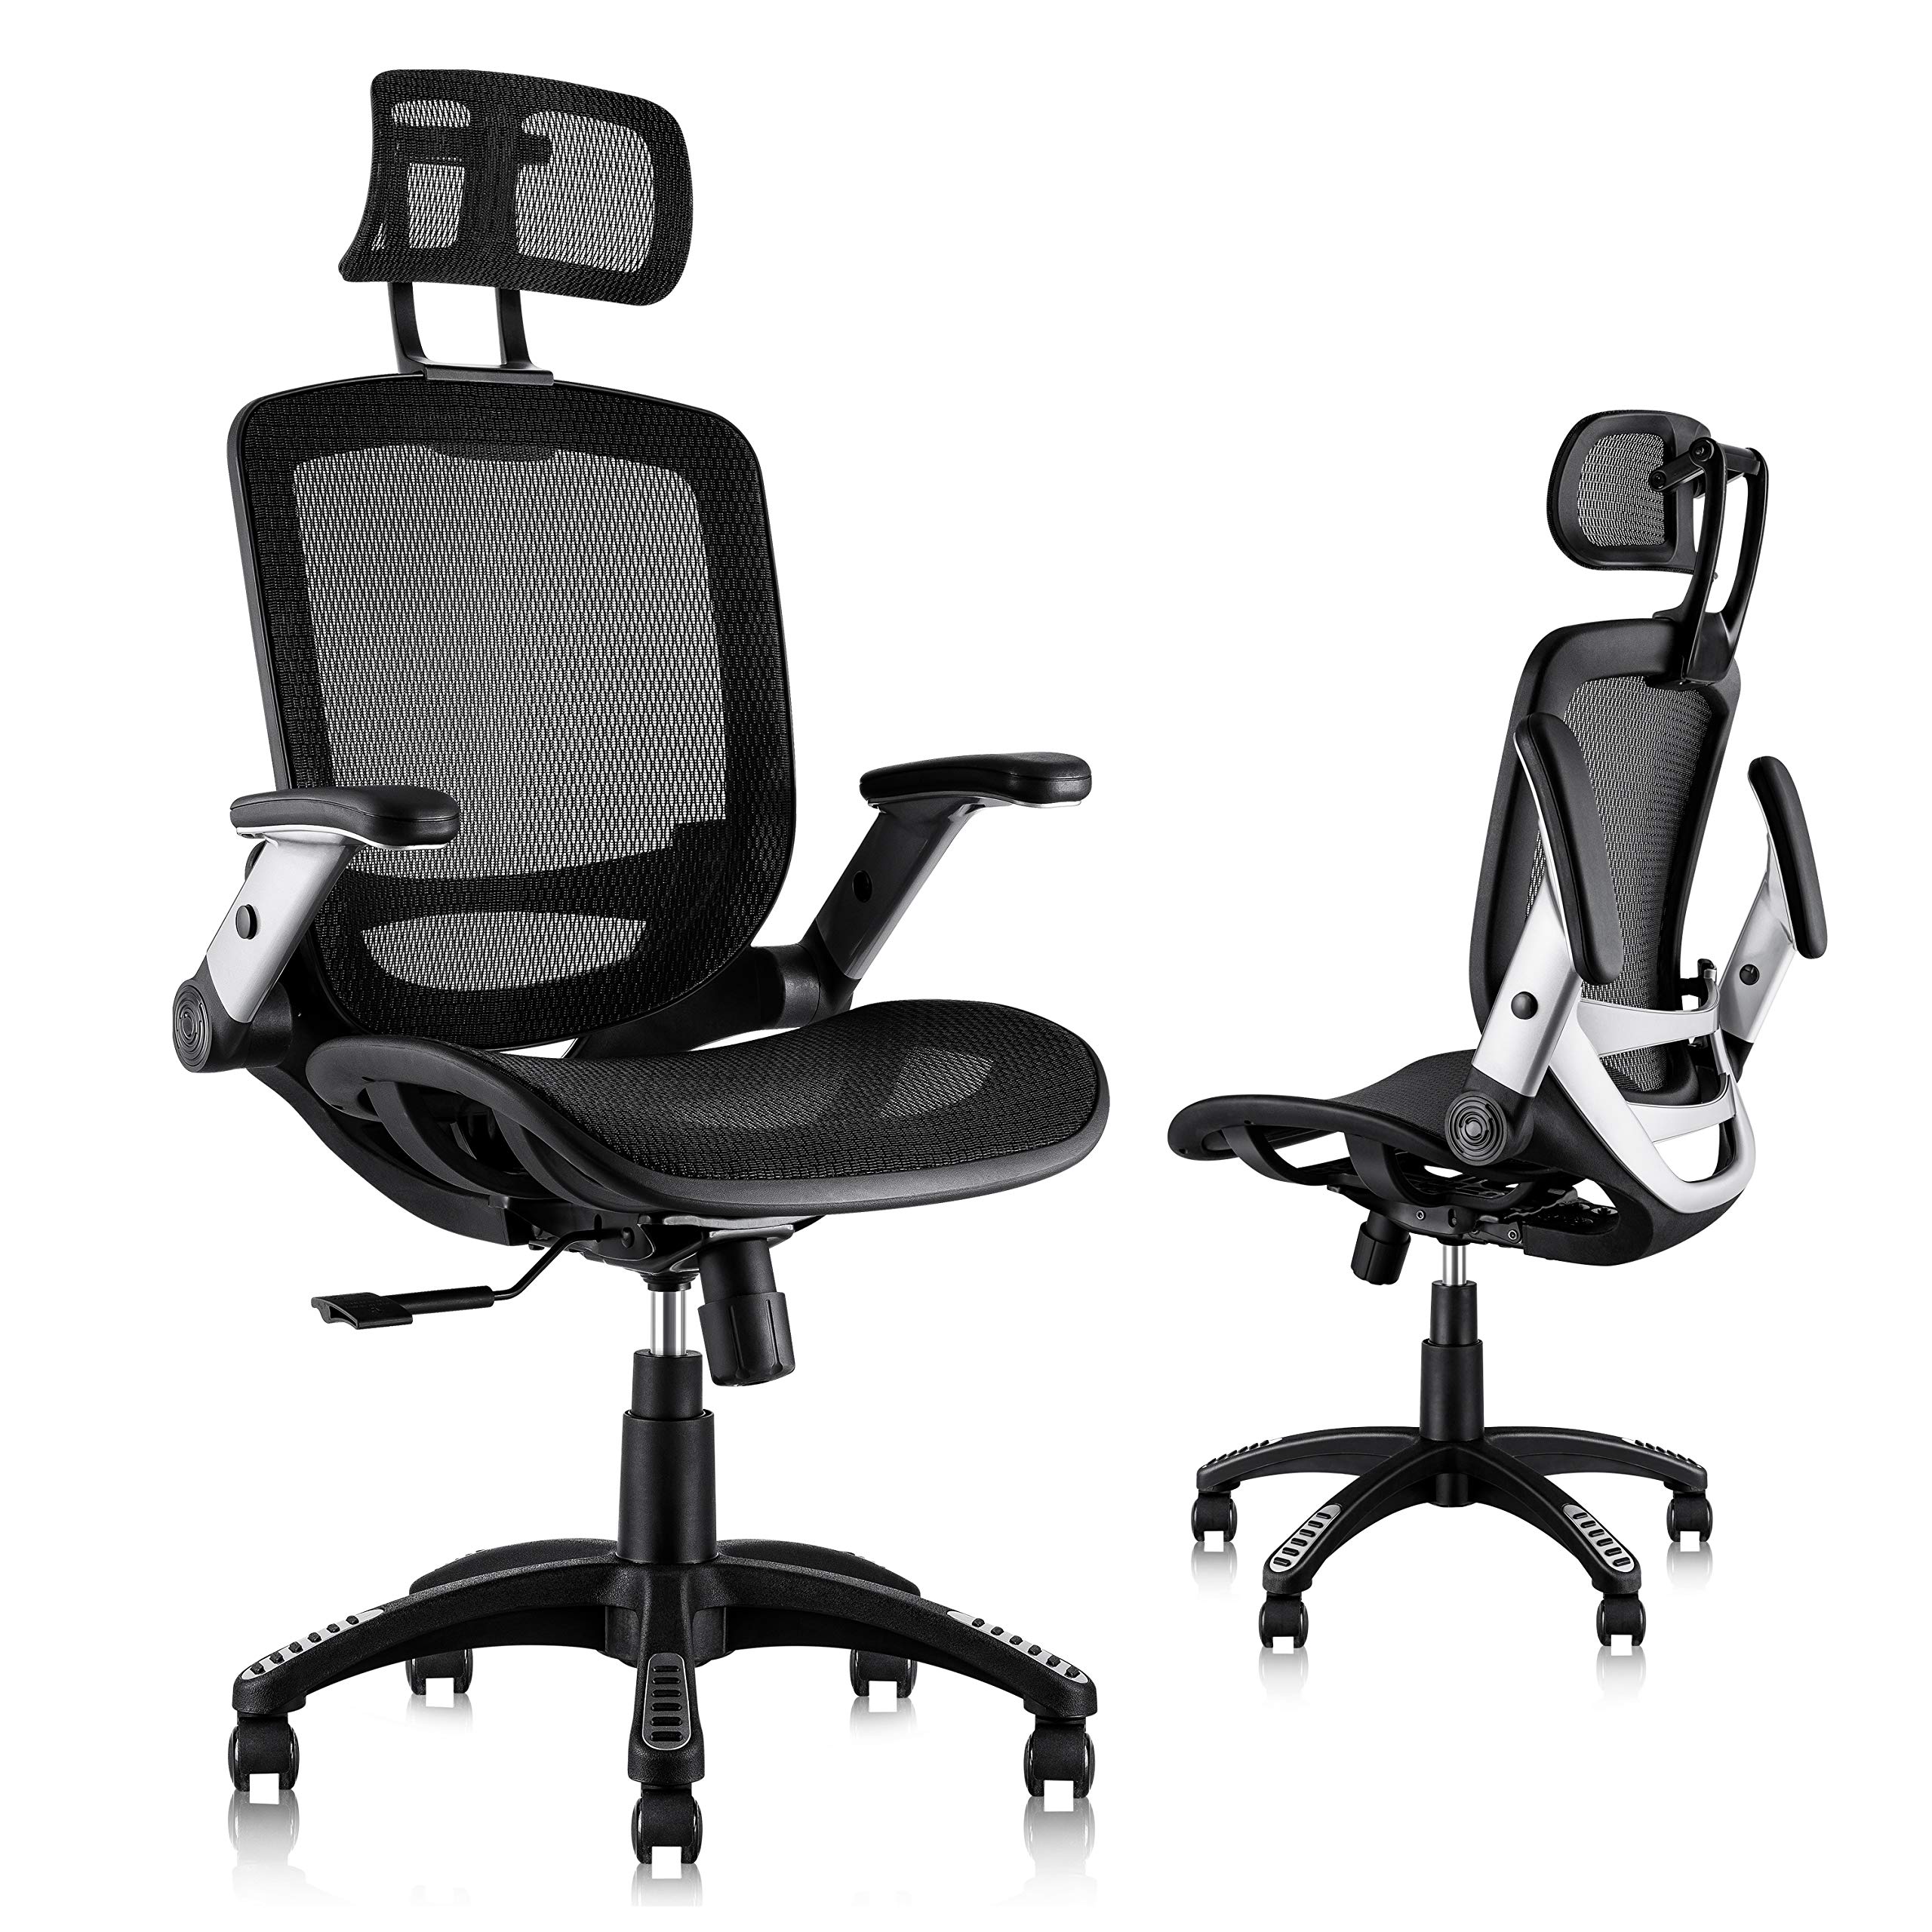 Buy Gabrylly Ergonomic Mesh Office Chair, High Back Desk Chair